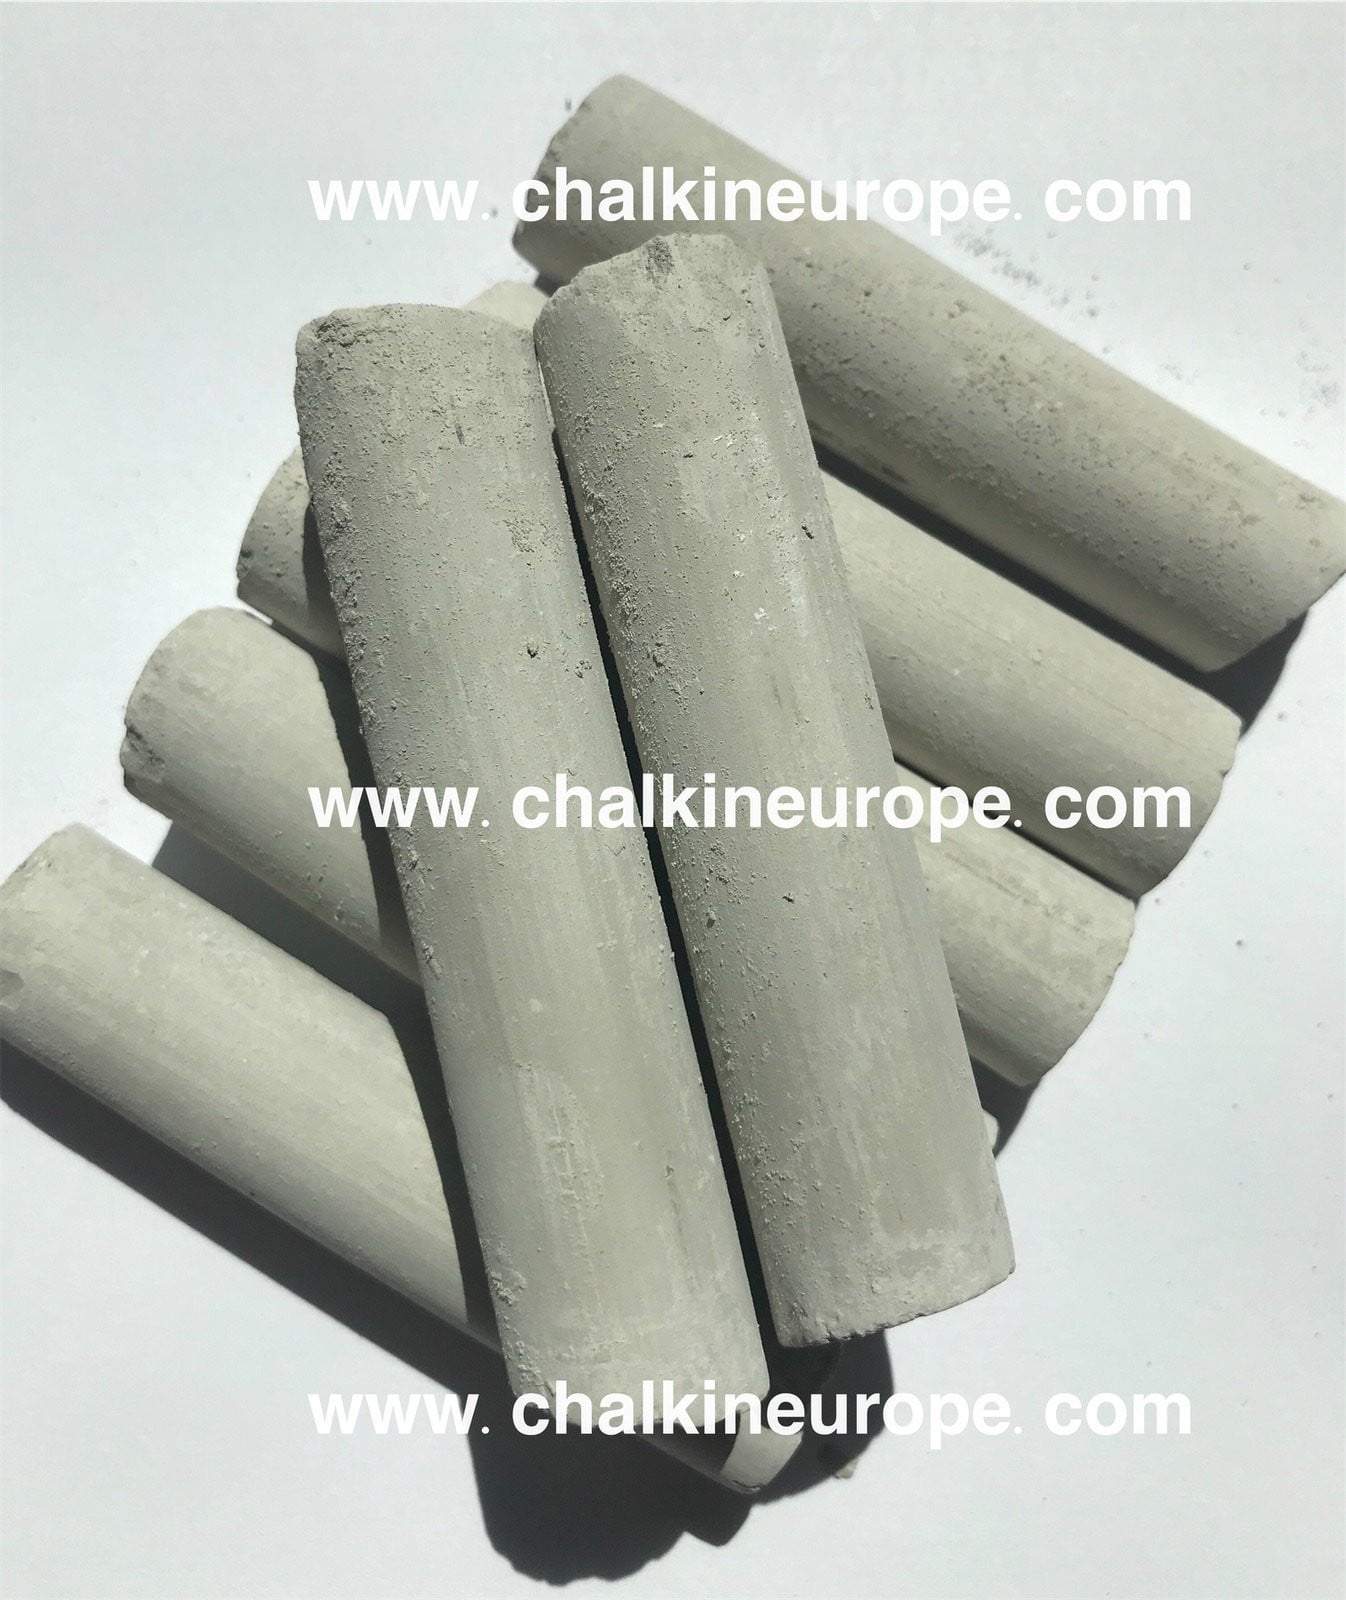 Bamboo Grey Clay - Chalkineurope